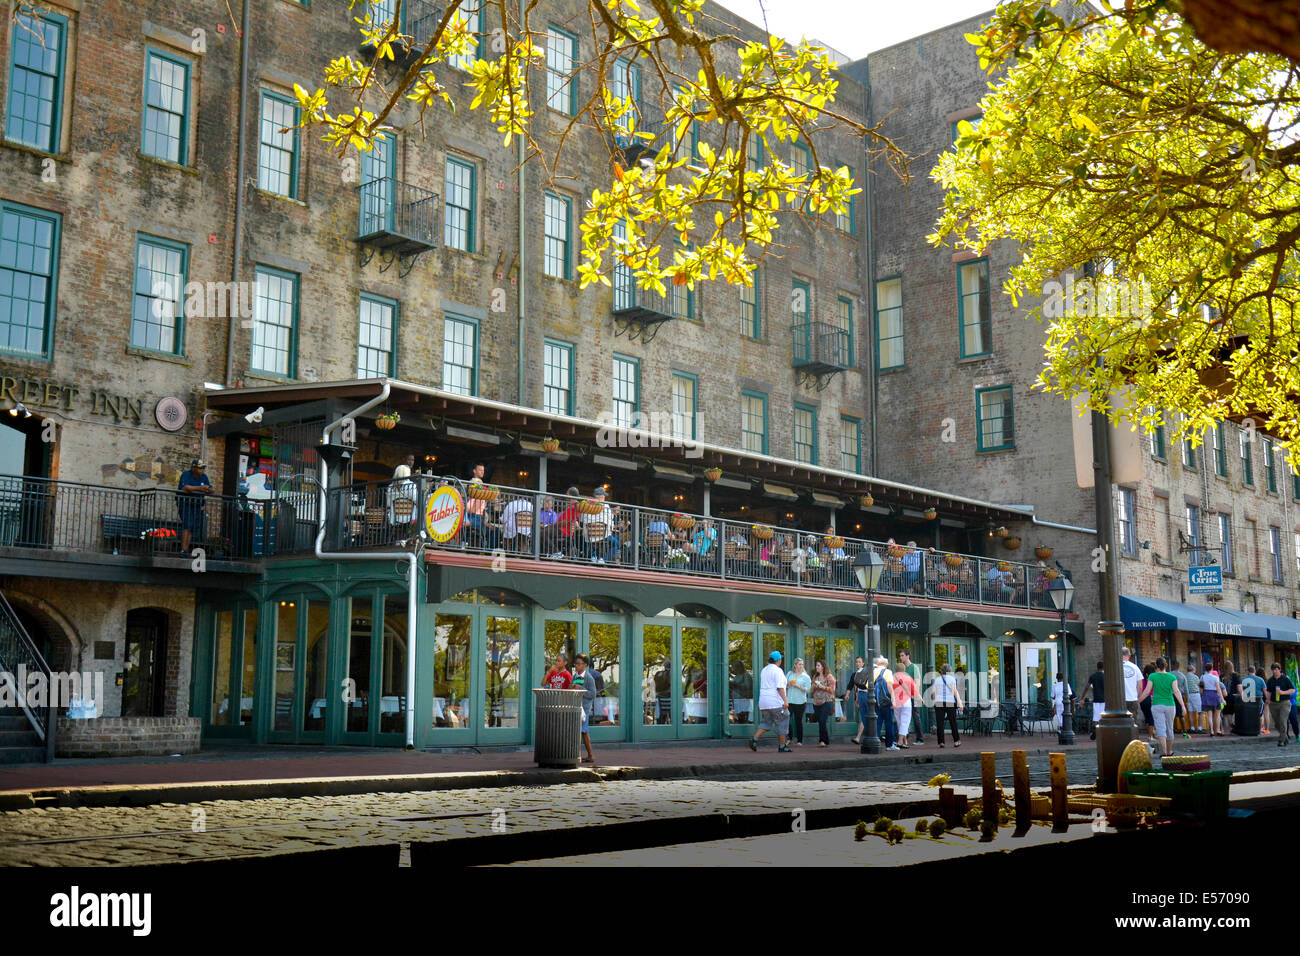 Restaurants enjoy many patrons at the Rousakis Riverfront Plaza, Savannah, GA, USA Stock Photo